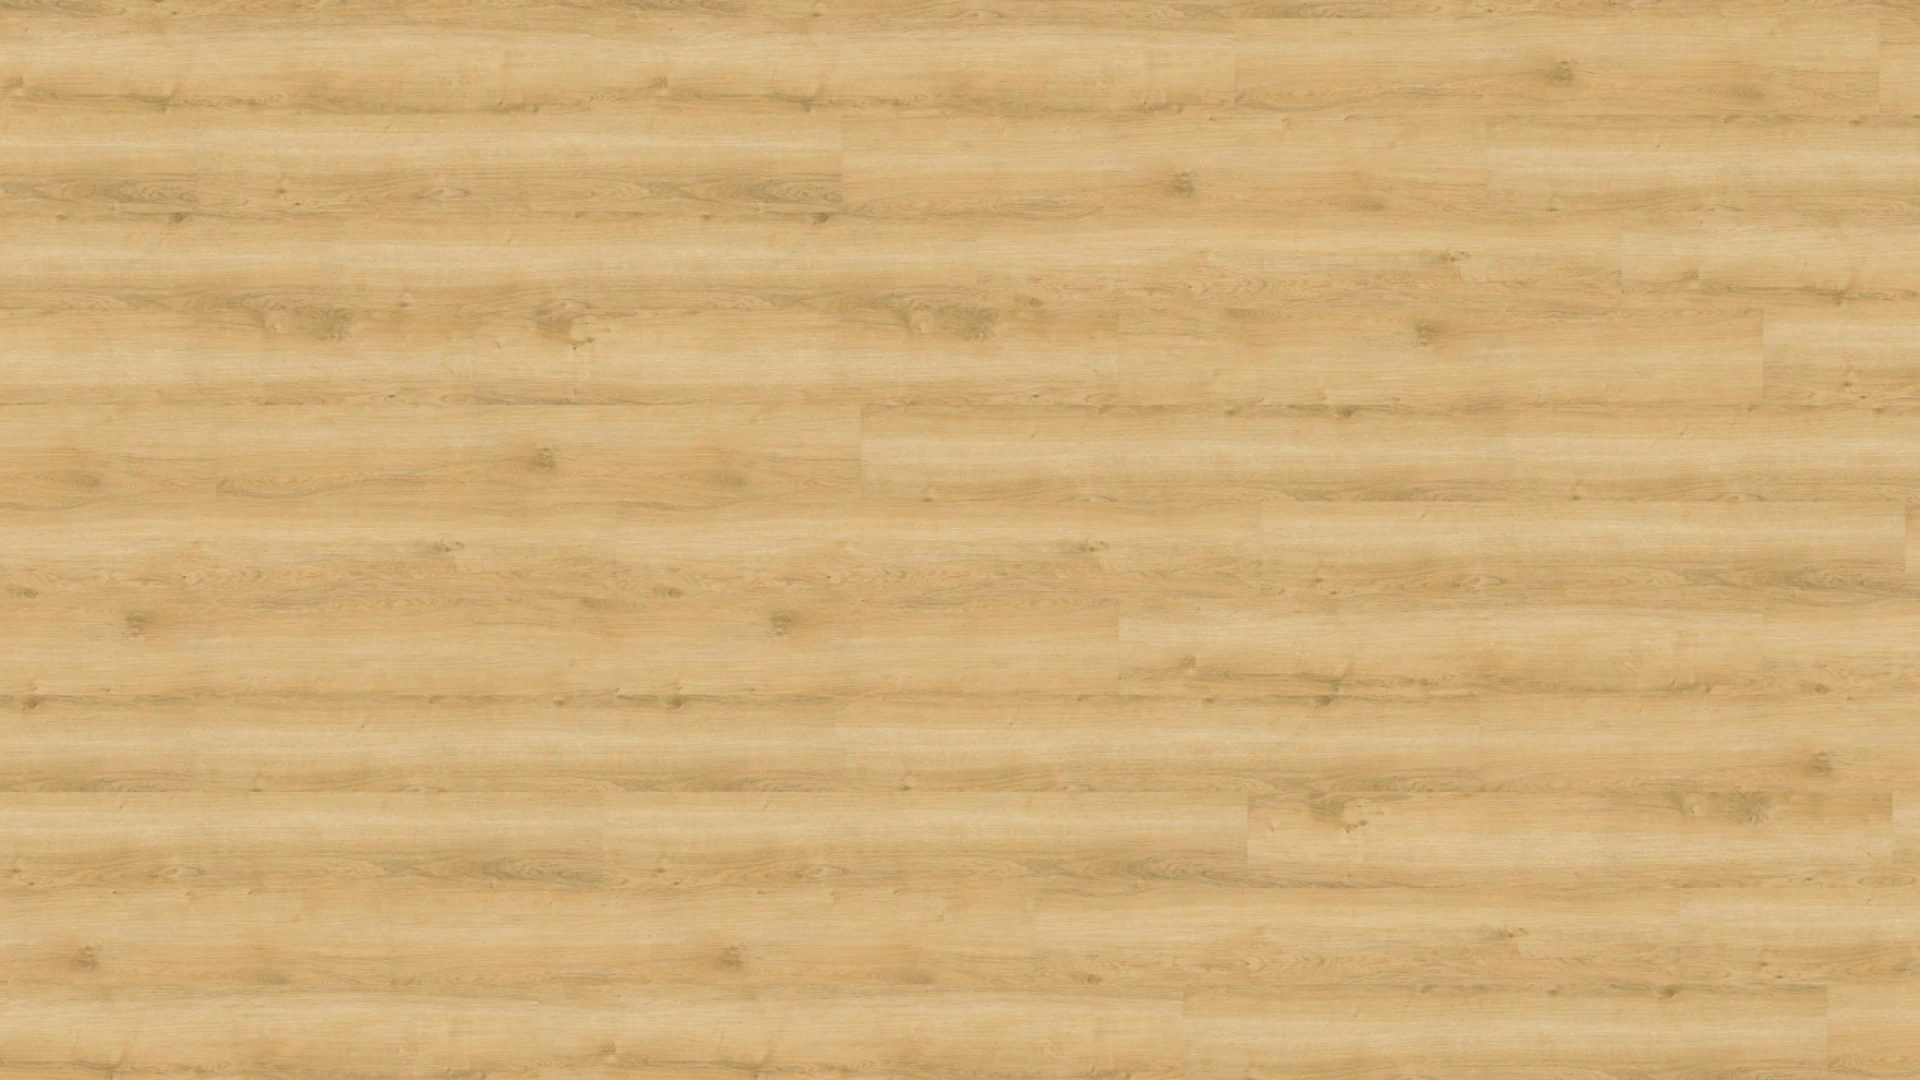 Wineo Sol PVC clipsable - 800 wood Wheat Golden Oak (DLC00080)